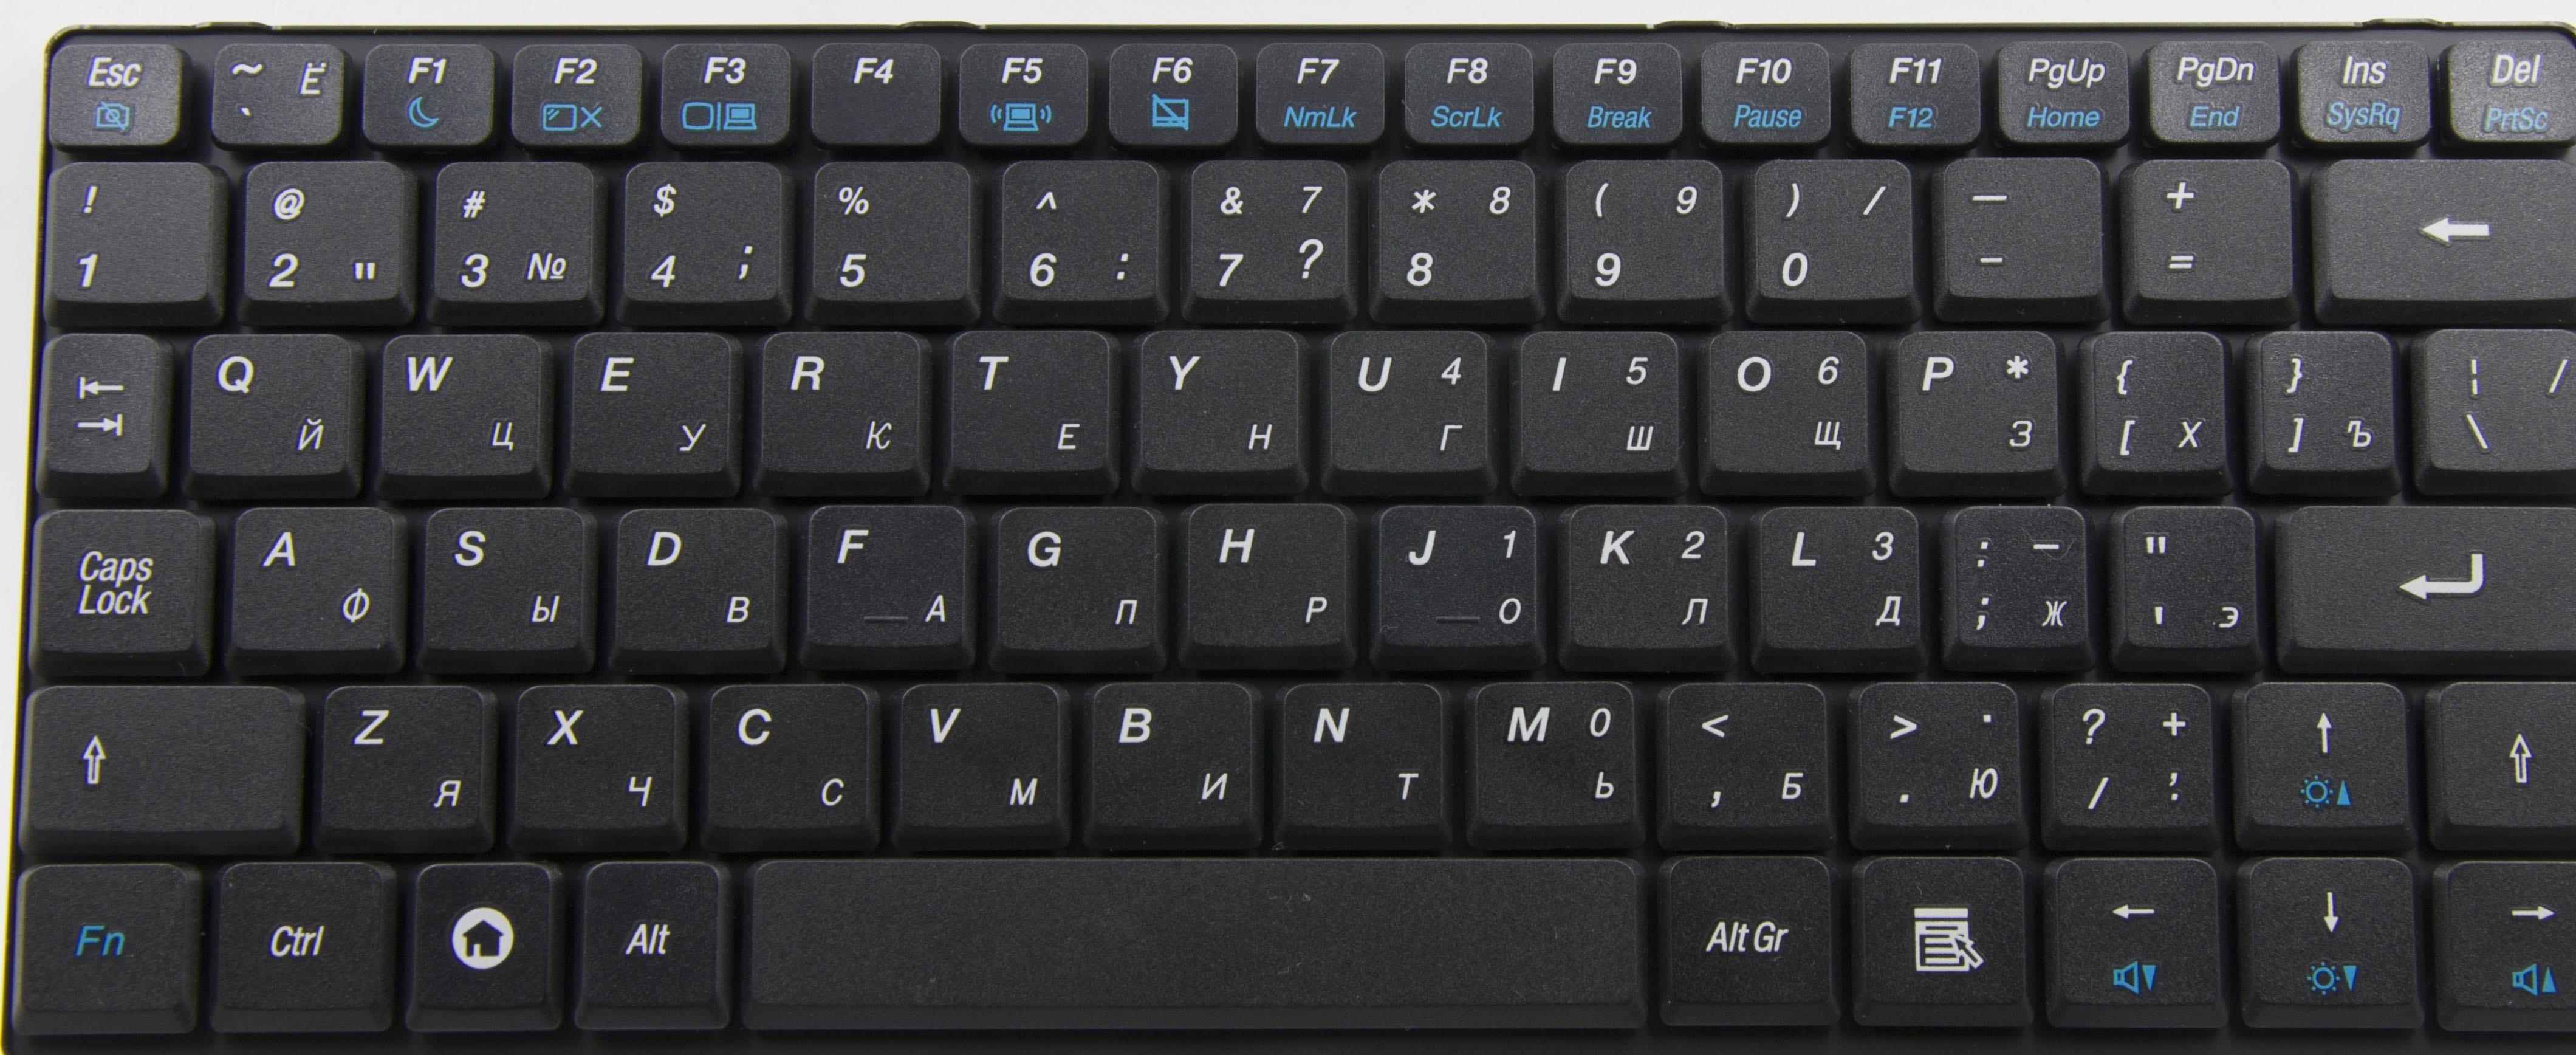 Не работают клавиши F1-F12 на клавиатуре без Fn